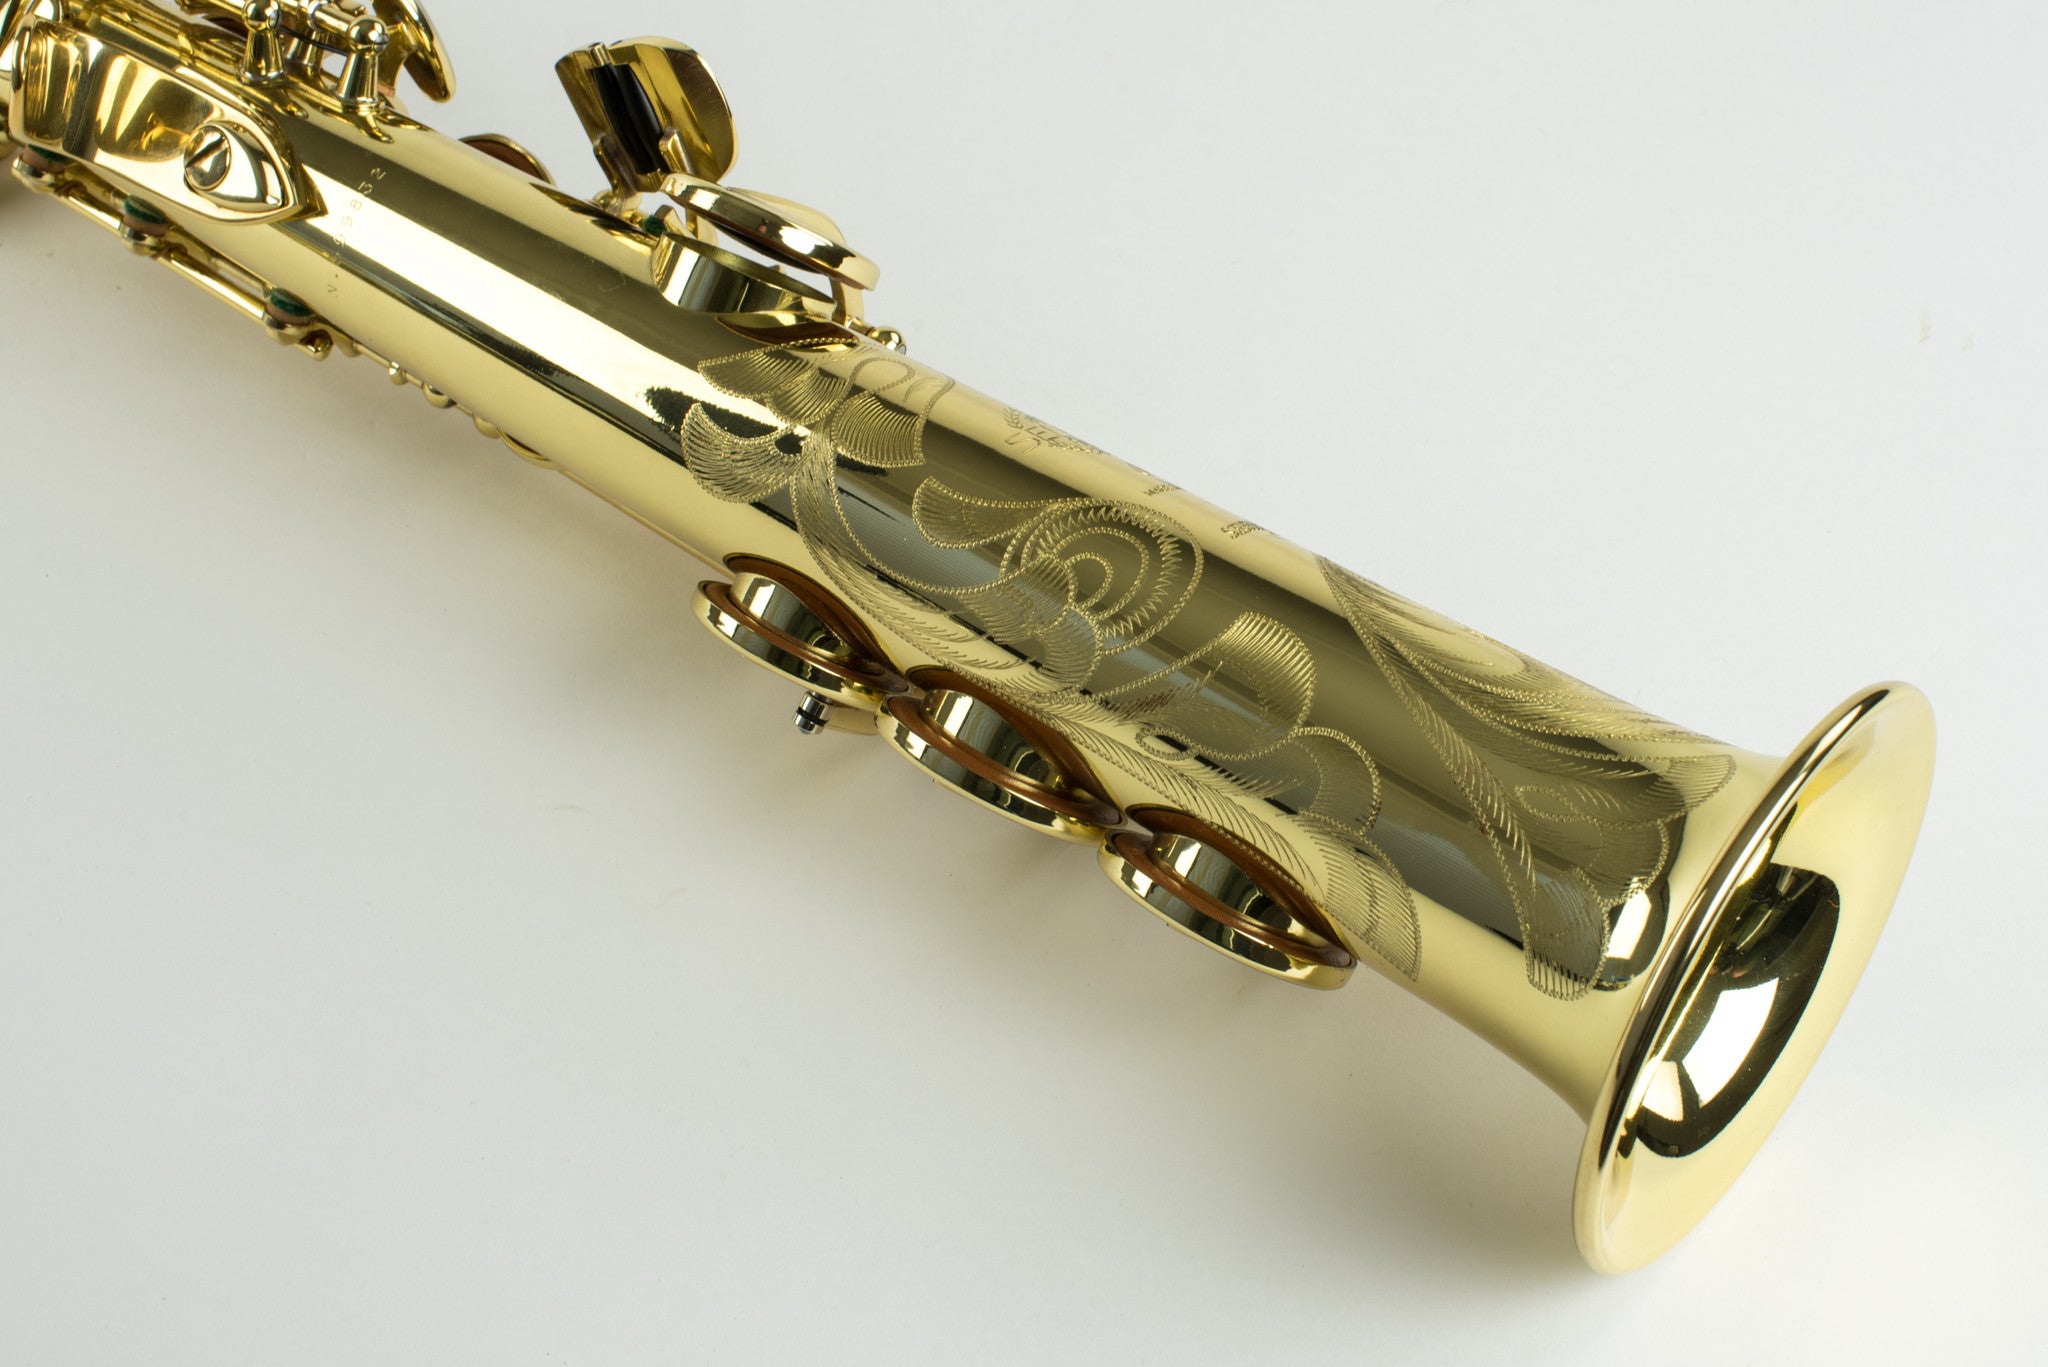 Selmer Series III Soprano Saxophone Mint Condition